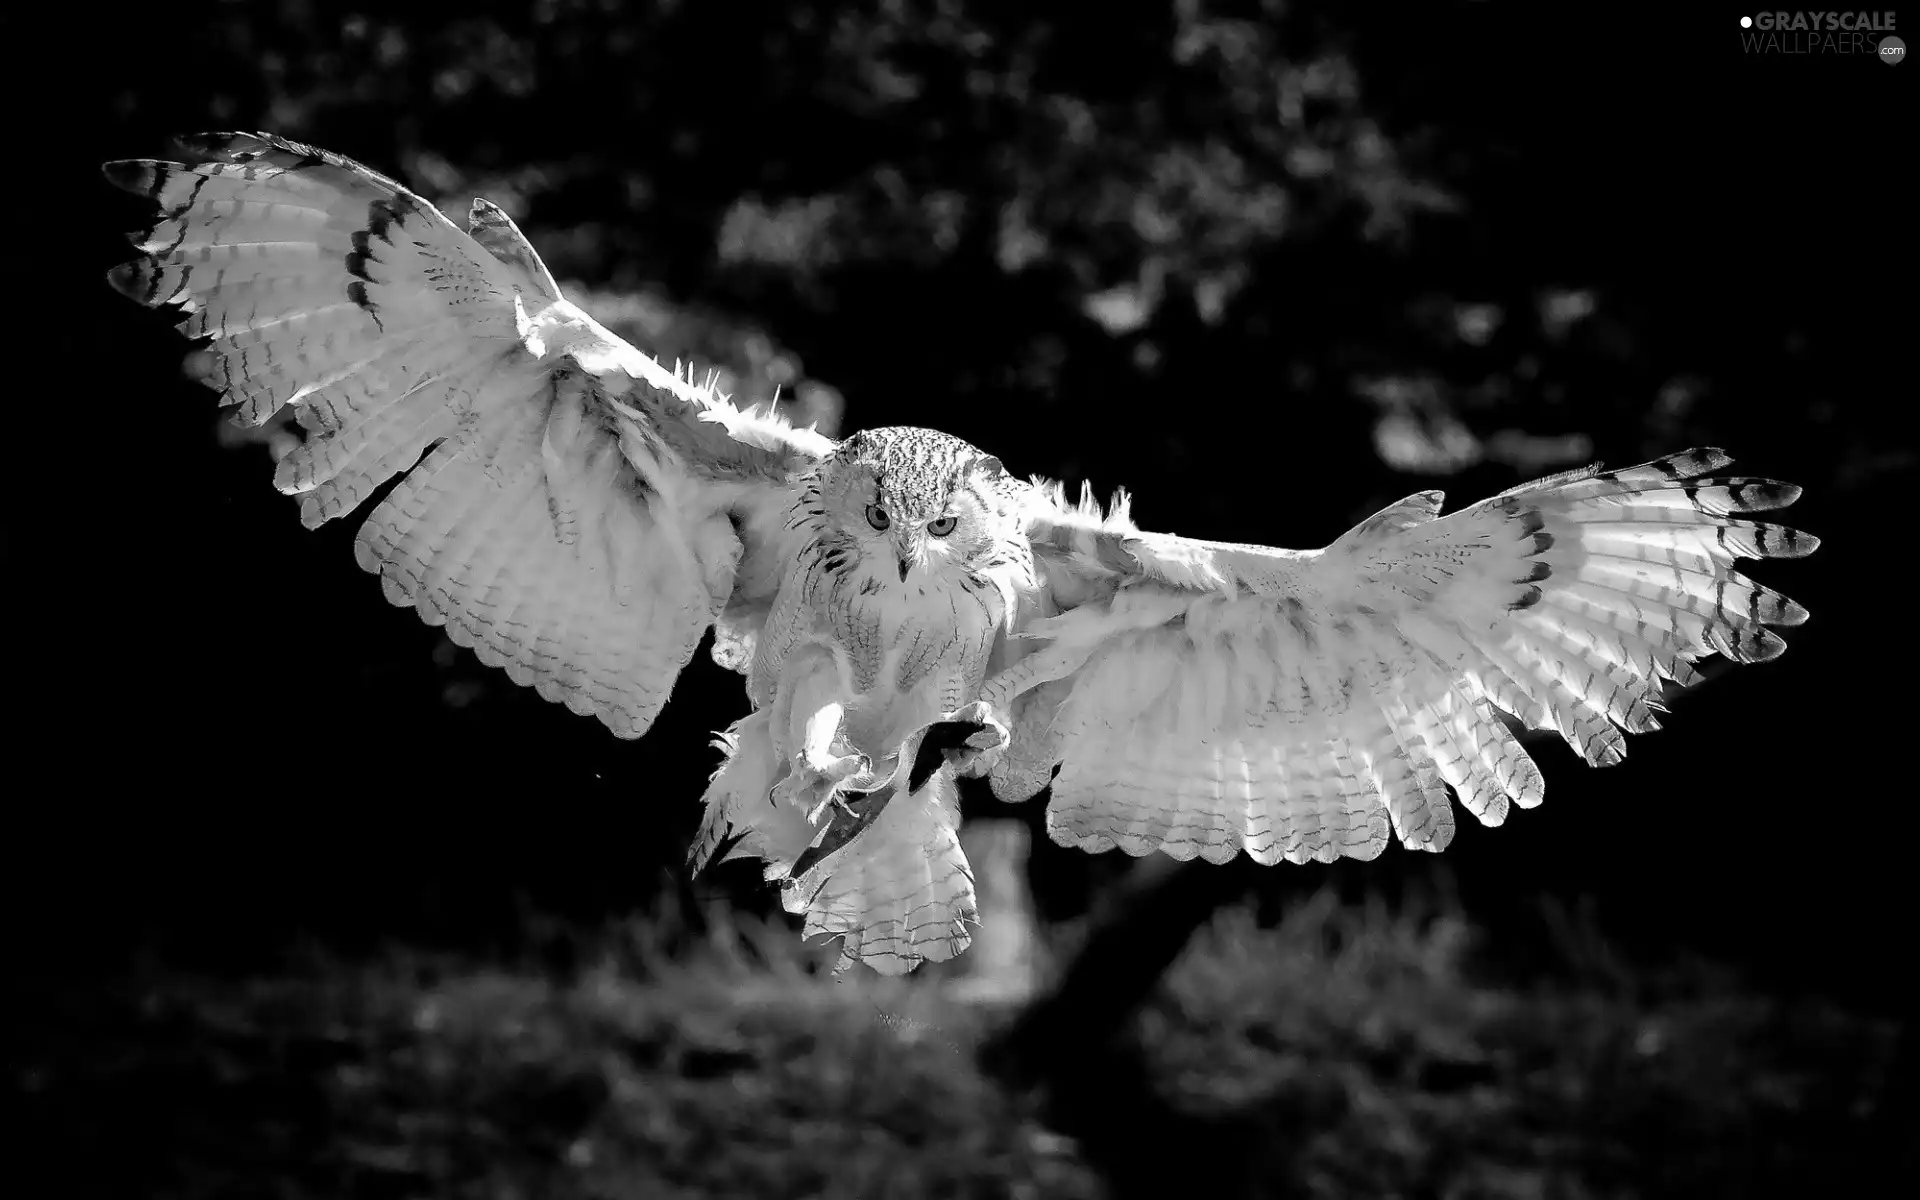 The flying, owl